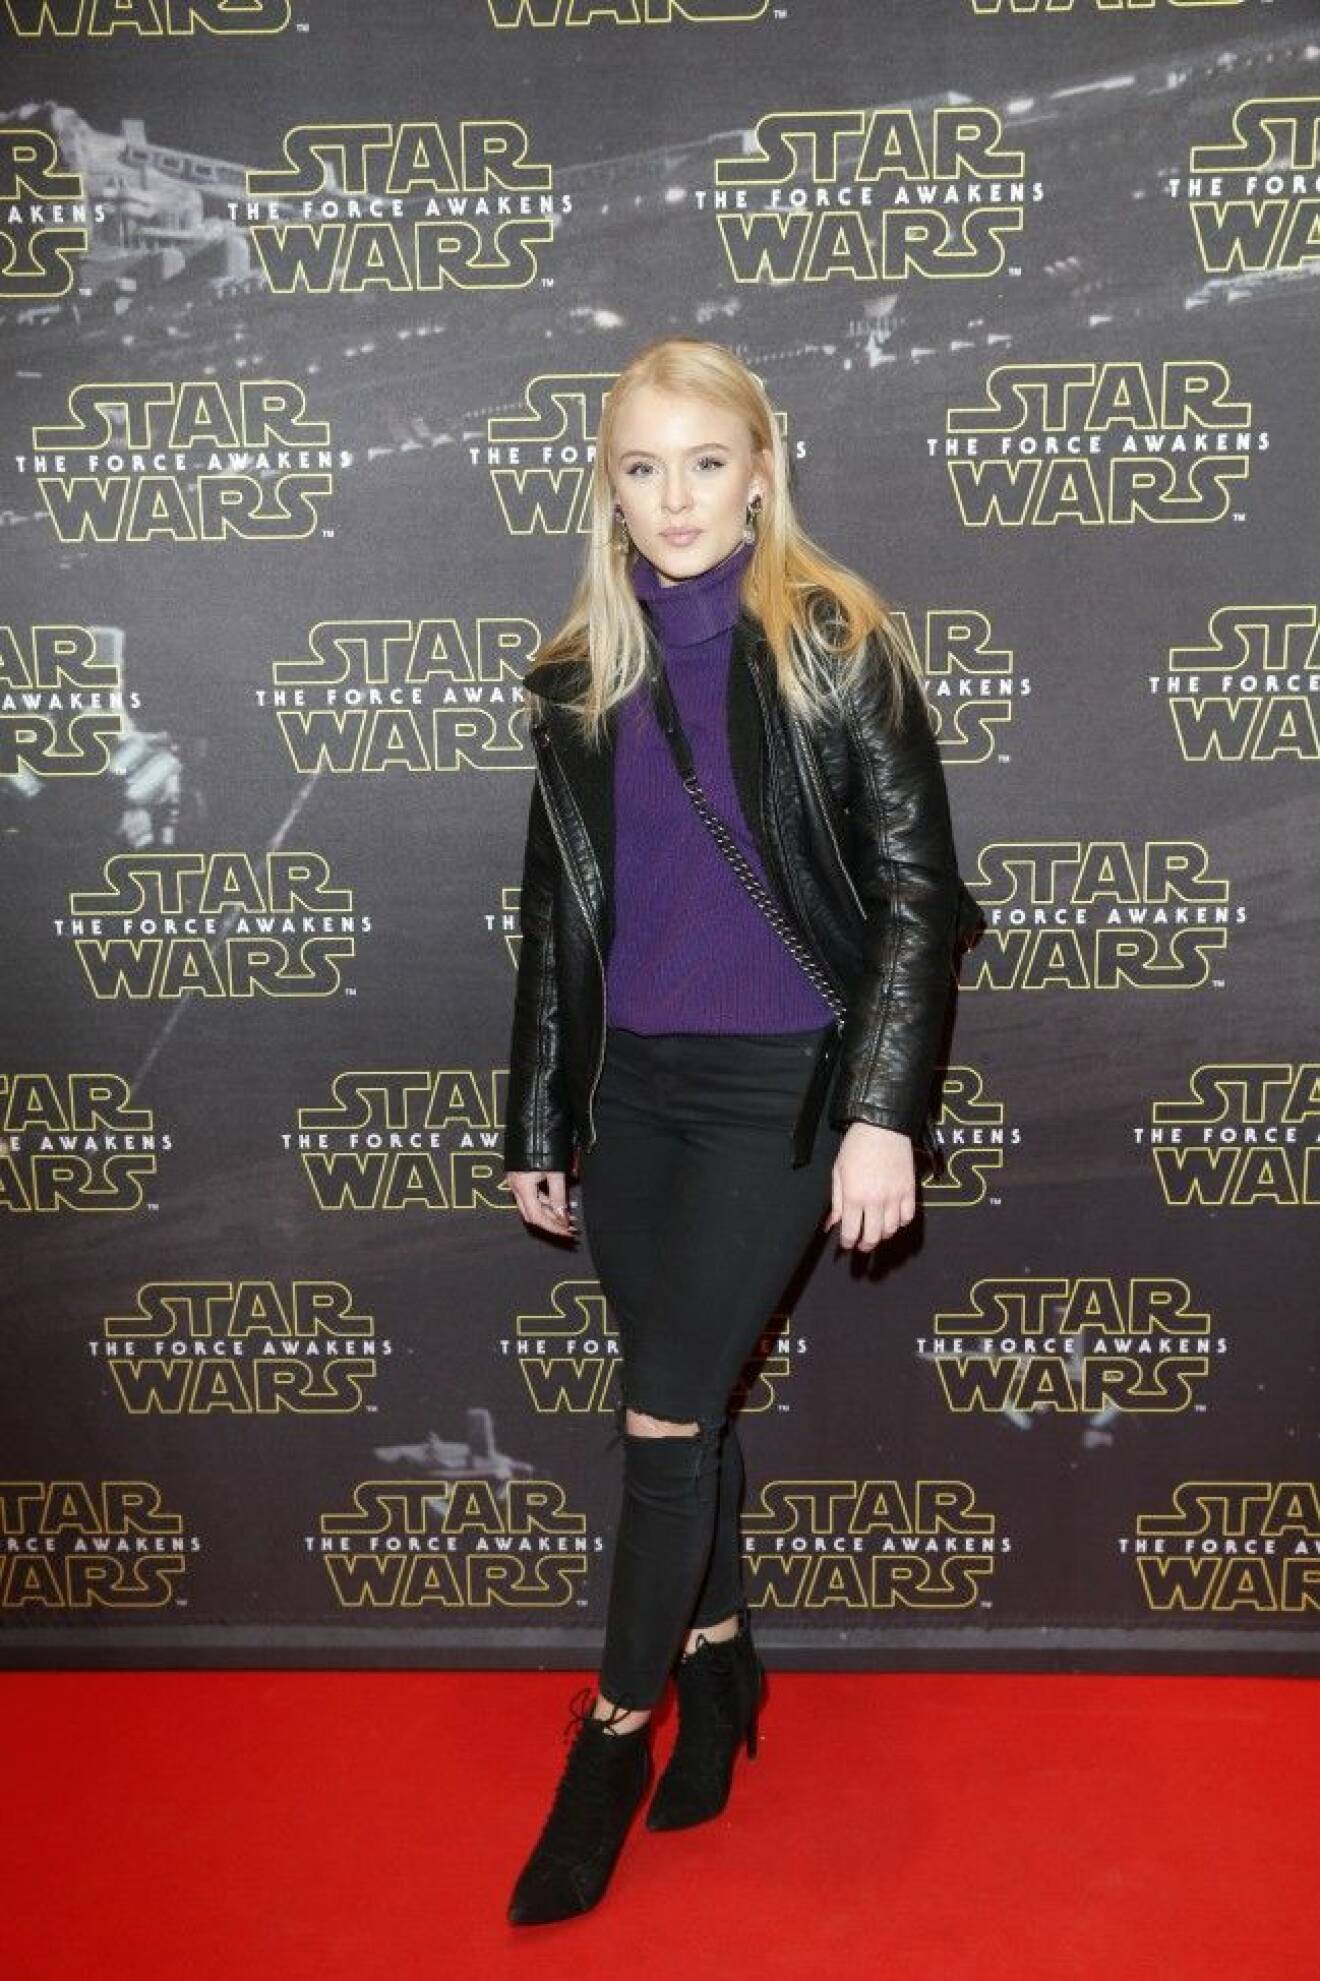 Star Wars Zara Larsson